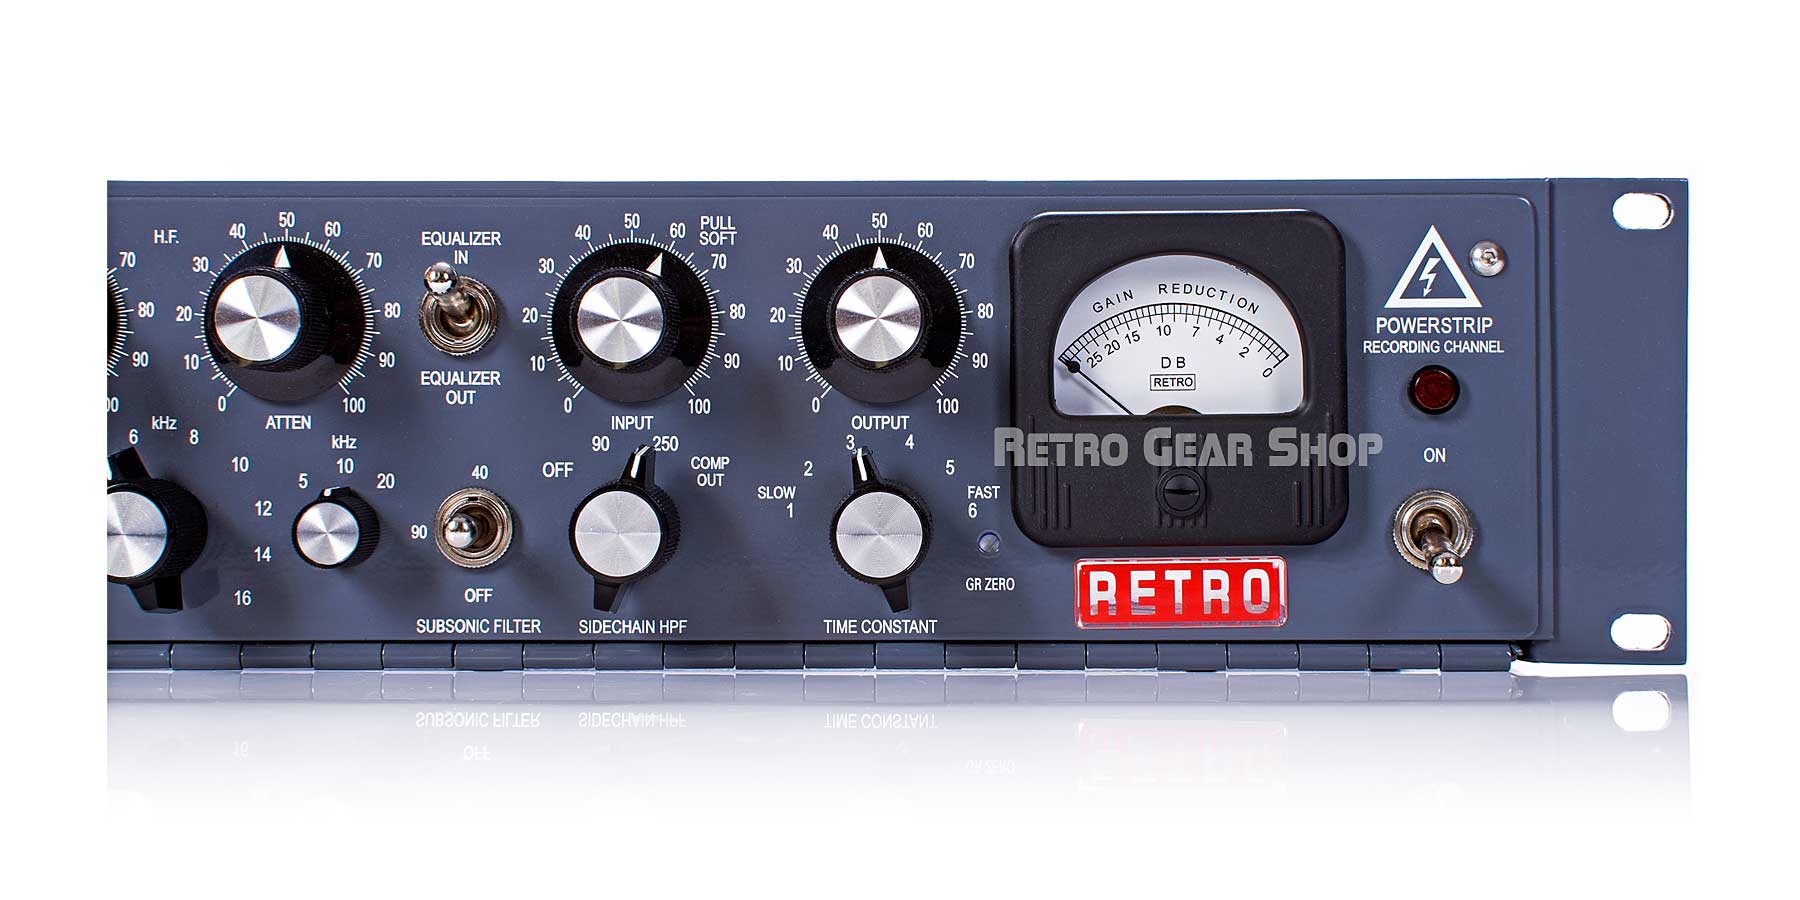 Retro Instruments Powerstrip Recording Channel VU Meter